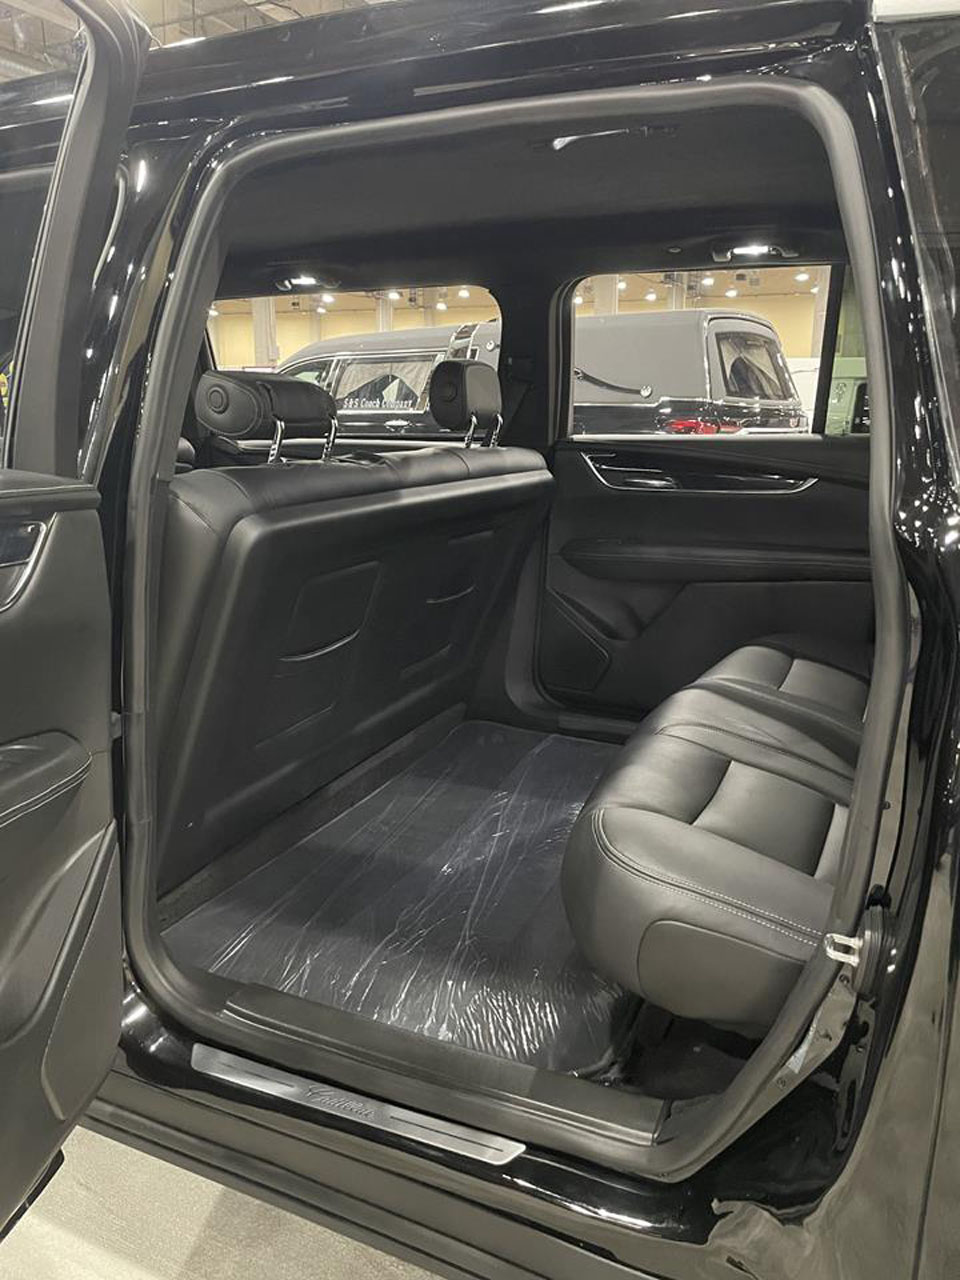 2021 Cadillac SS XT6 Presidential Limousine 819 9